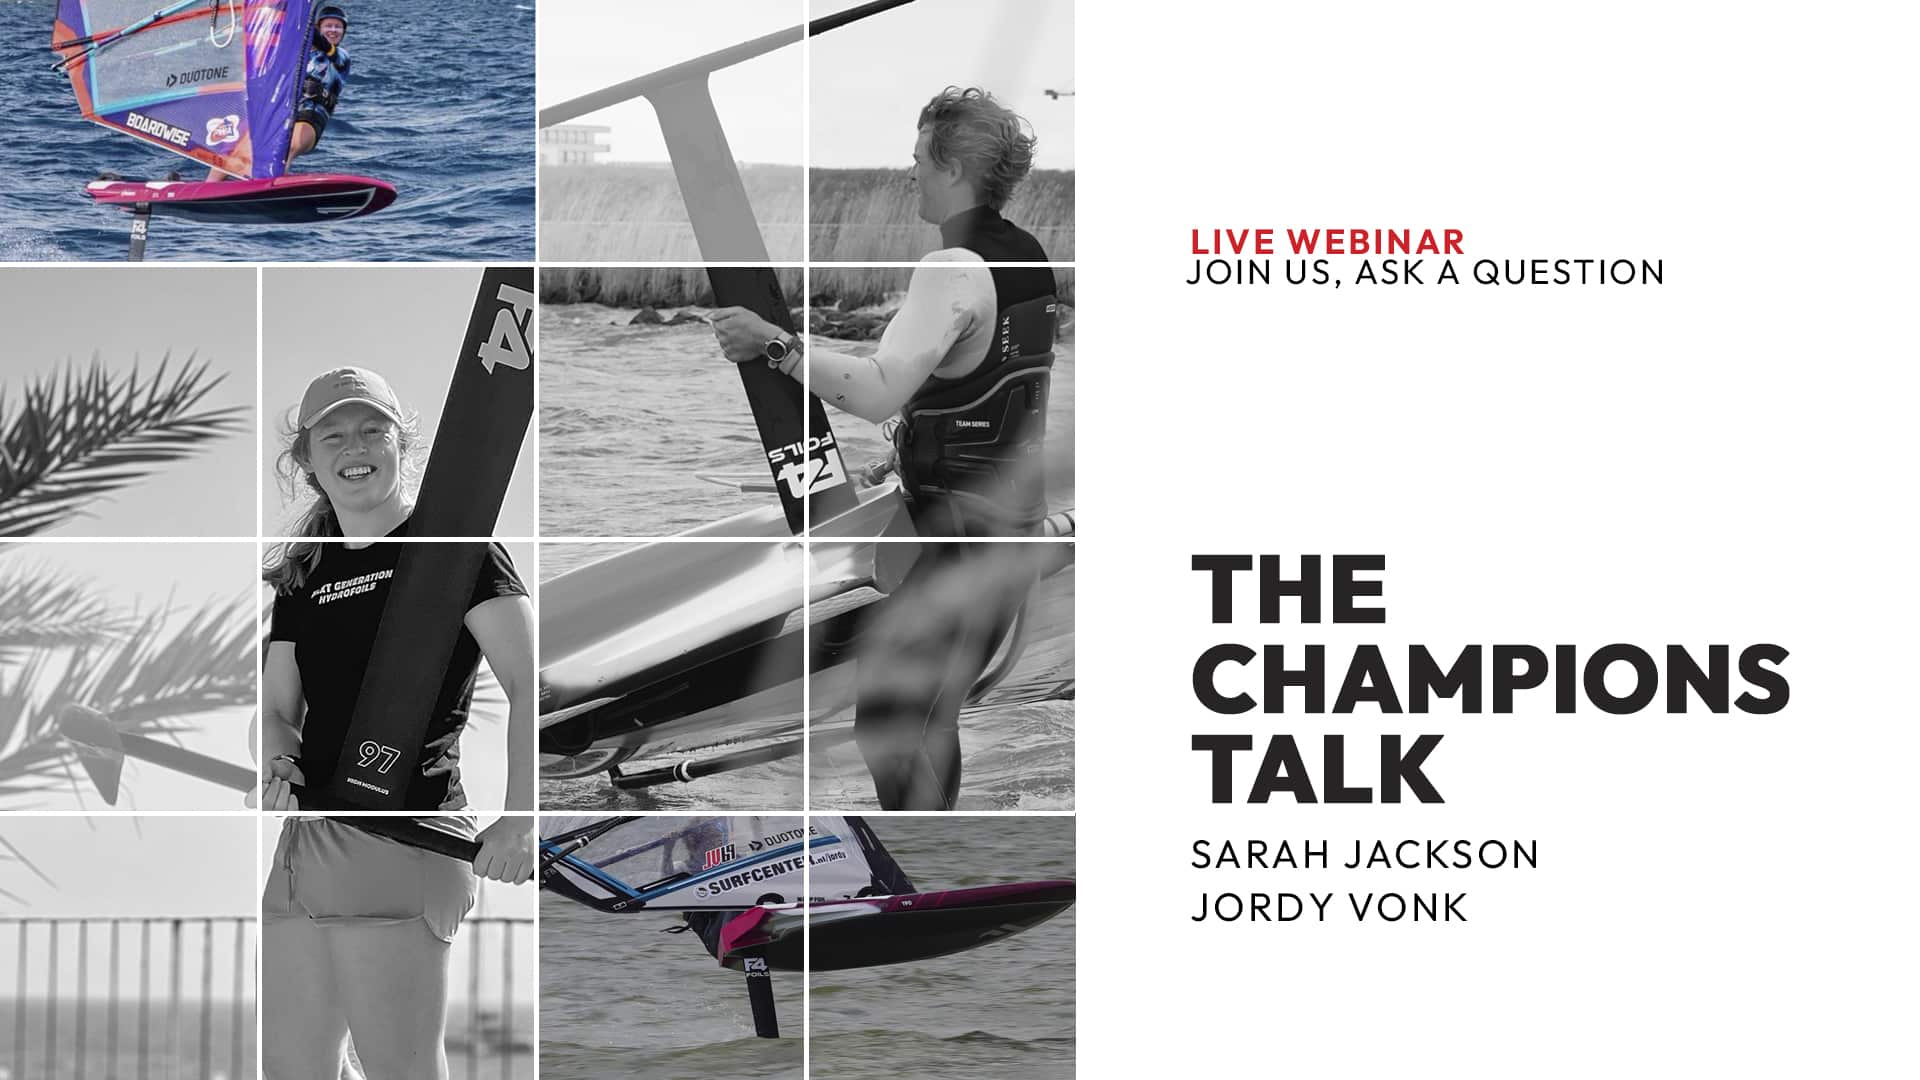 web webinar F4 foils Live: The Champions talk